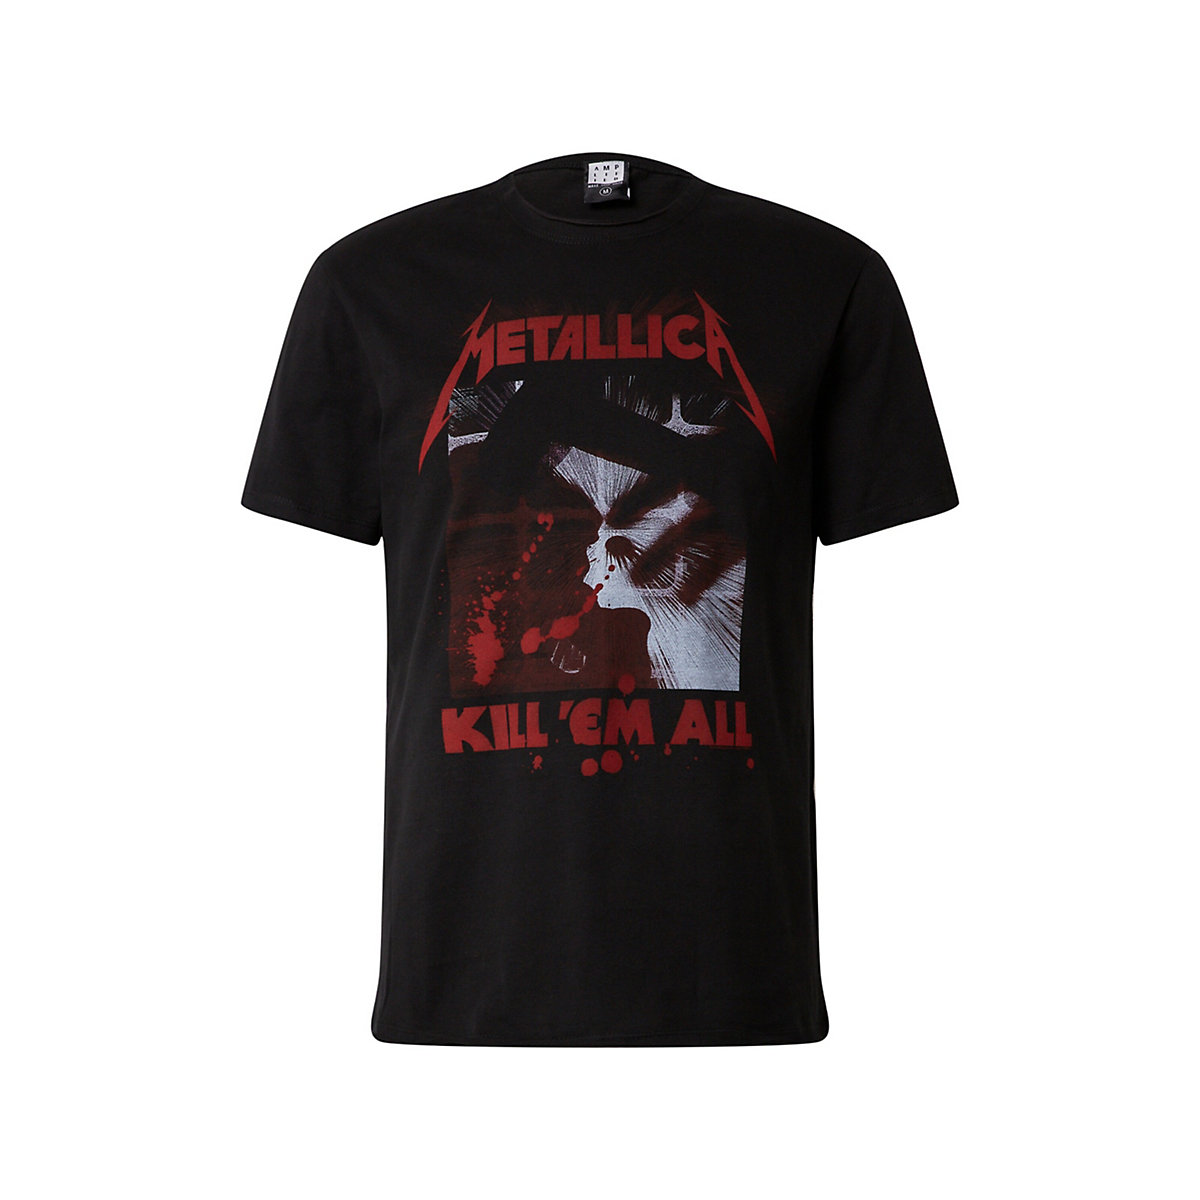 AMPLIFIED shirt metallica kill em all T-Shirts dunkelgrau